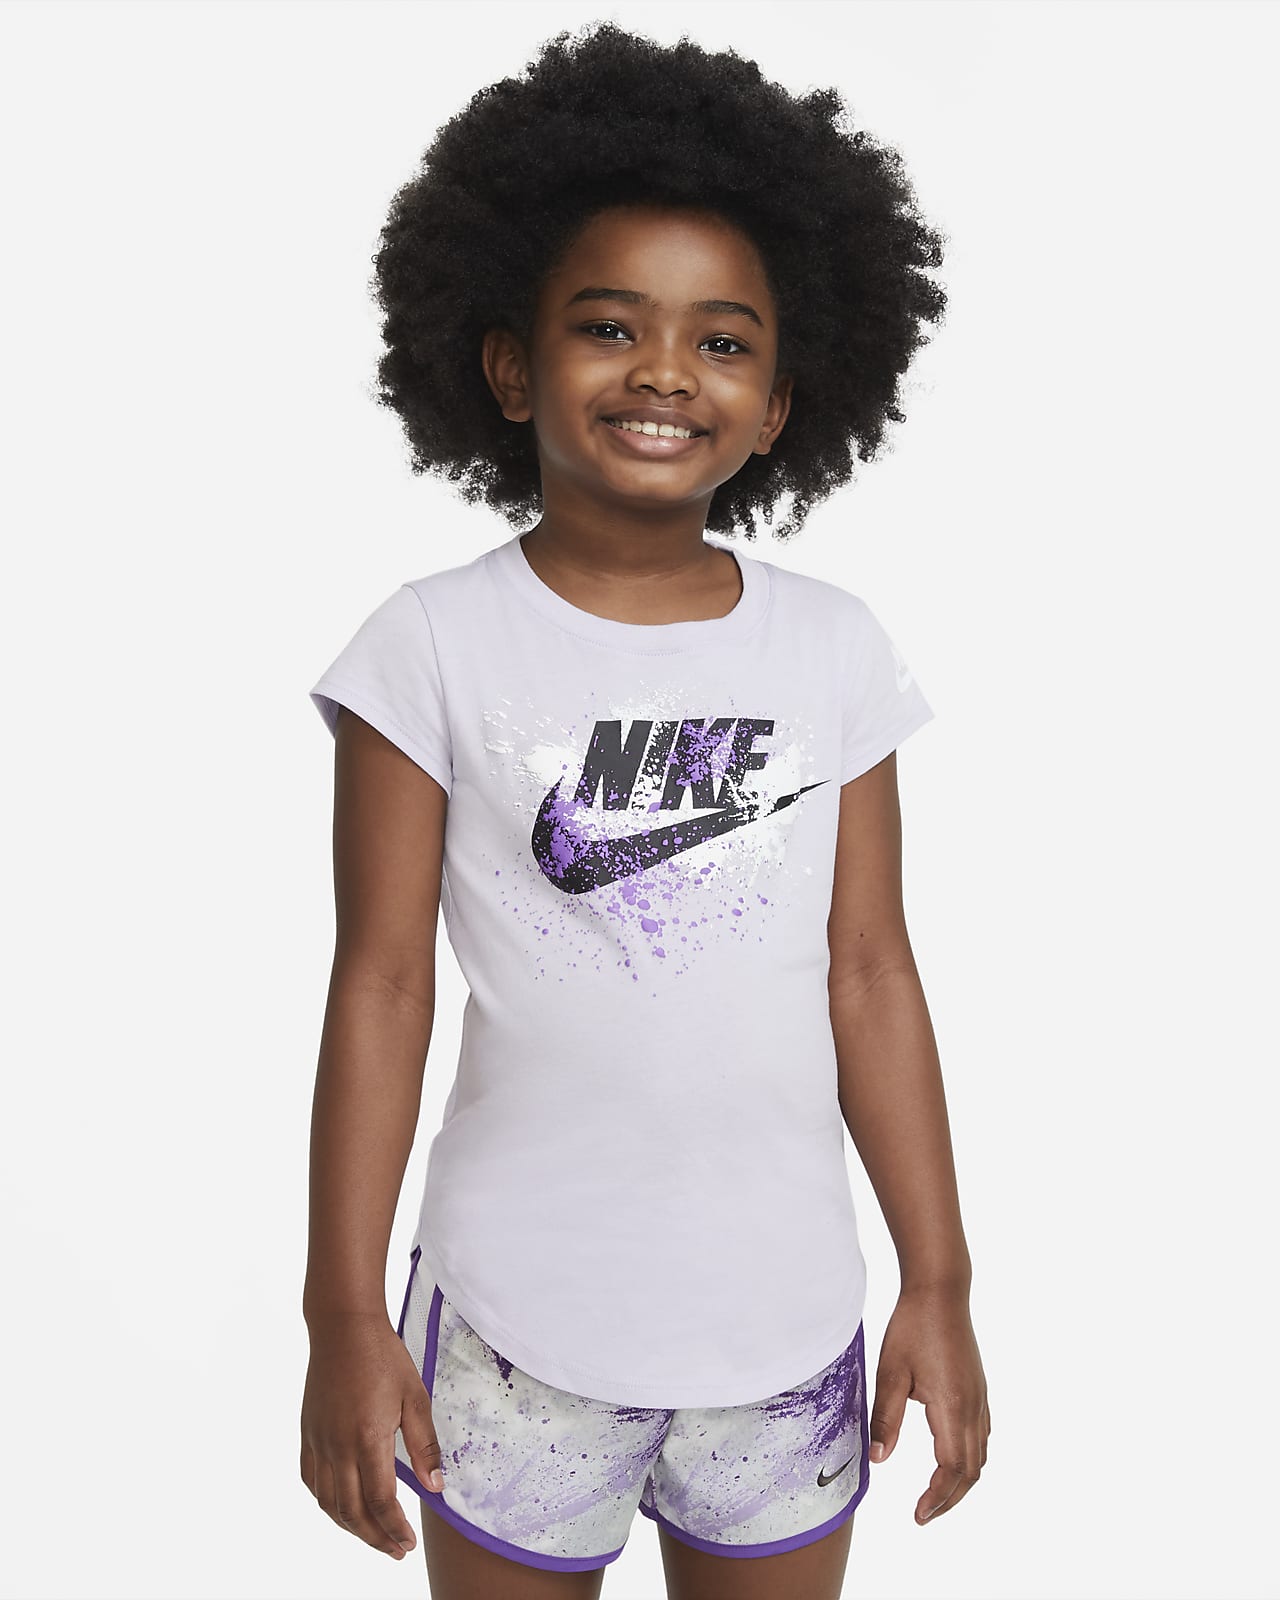 kids purple nike shirt